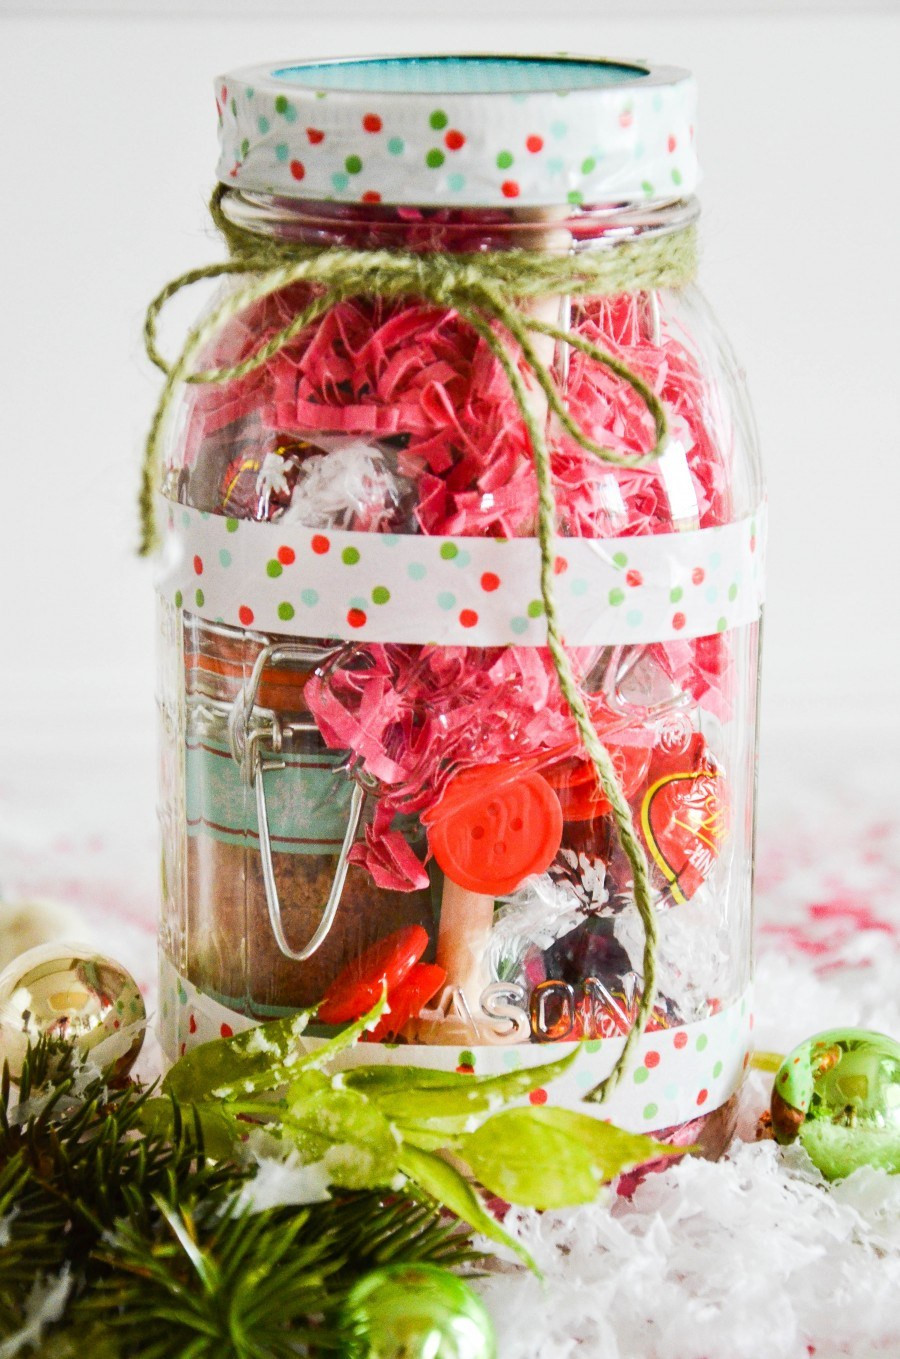 DIY Mason Jar Christmas Gifts
 25 Valentine s Day Gifts in a Mason Jar